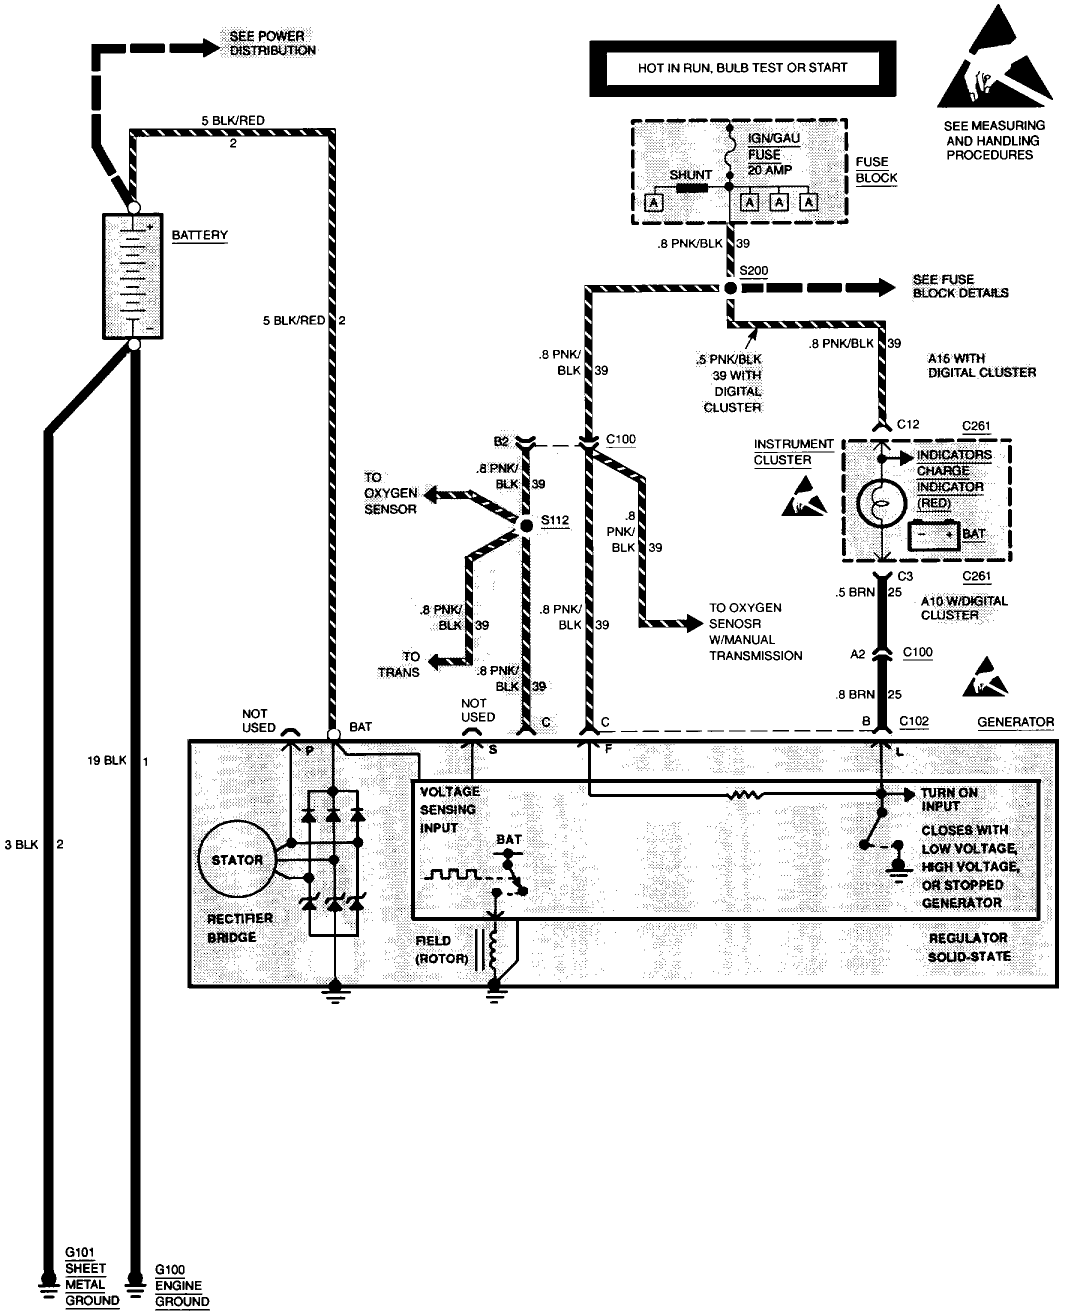 CarFusebox: Chevy S10 Blazer Alternator To C100 connector Wiring Diagram